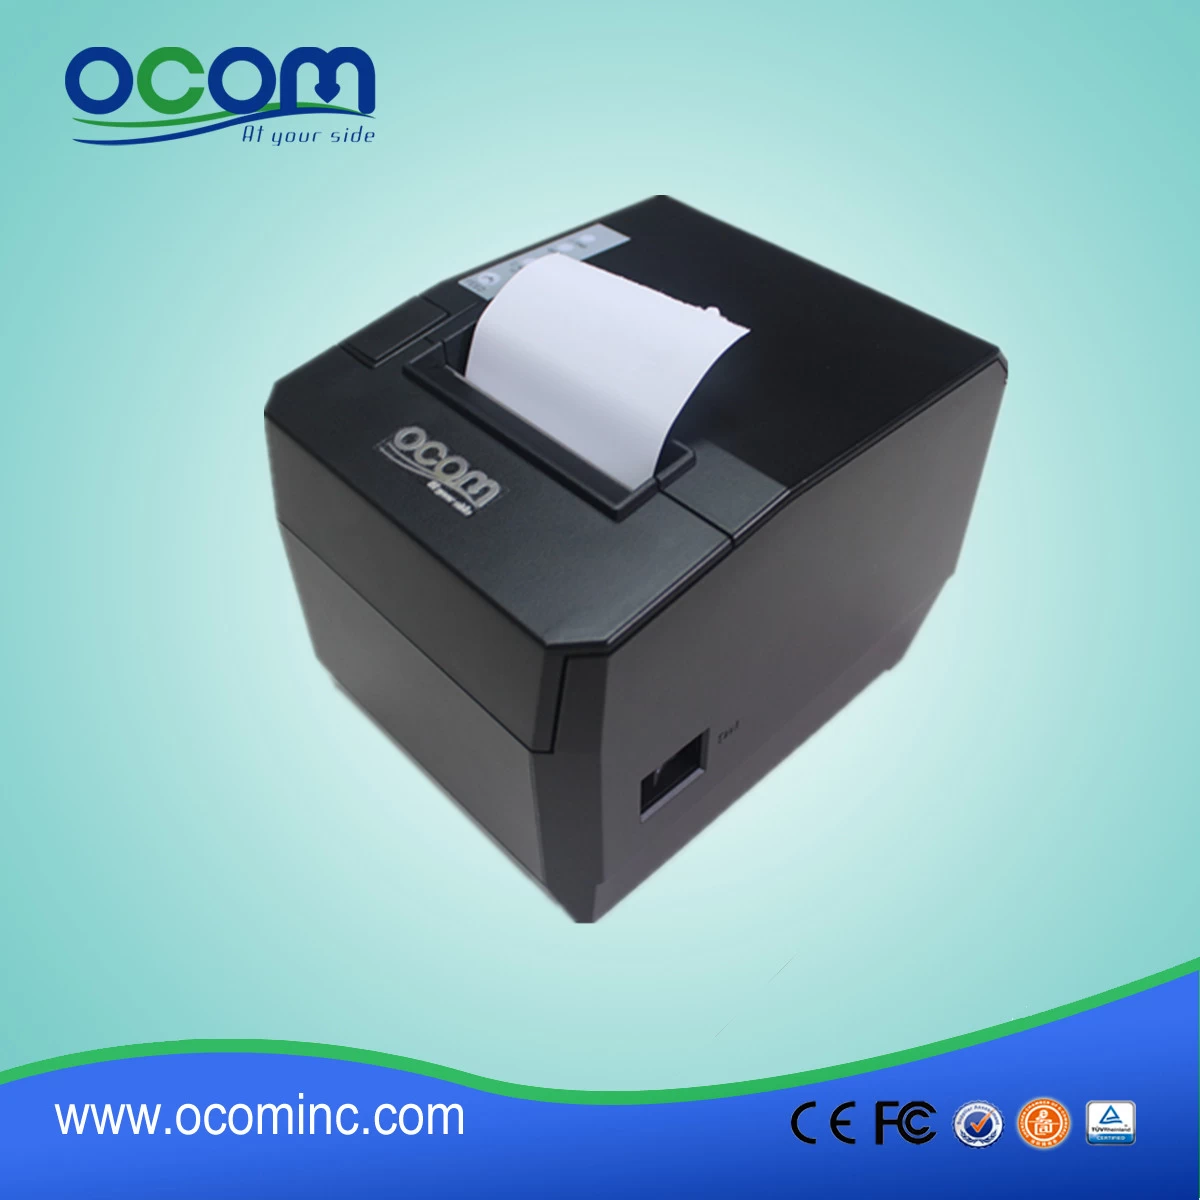 Re: 80mm bluetooth thermal receipt printer-OCPP-88A-BUL